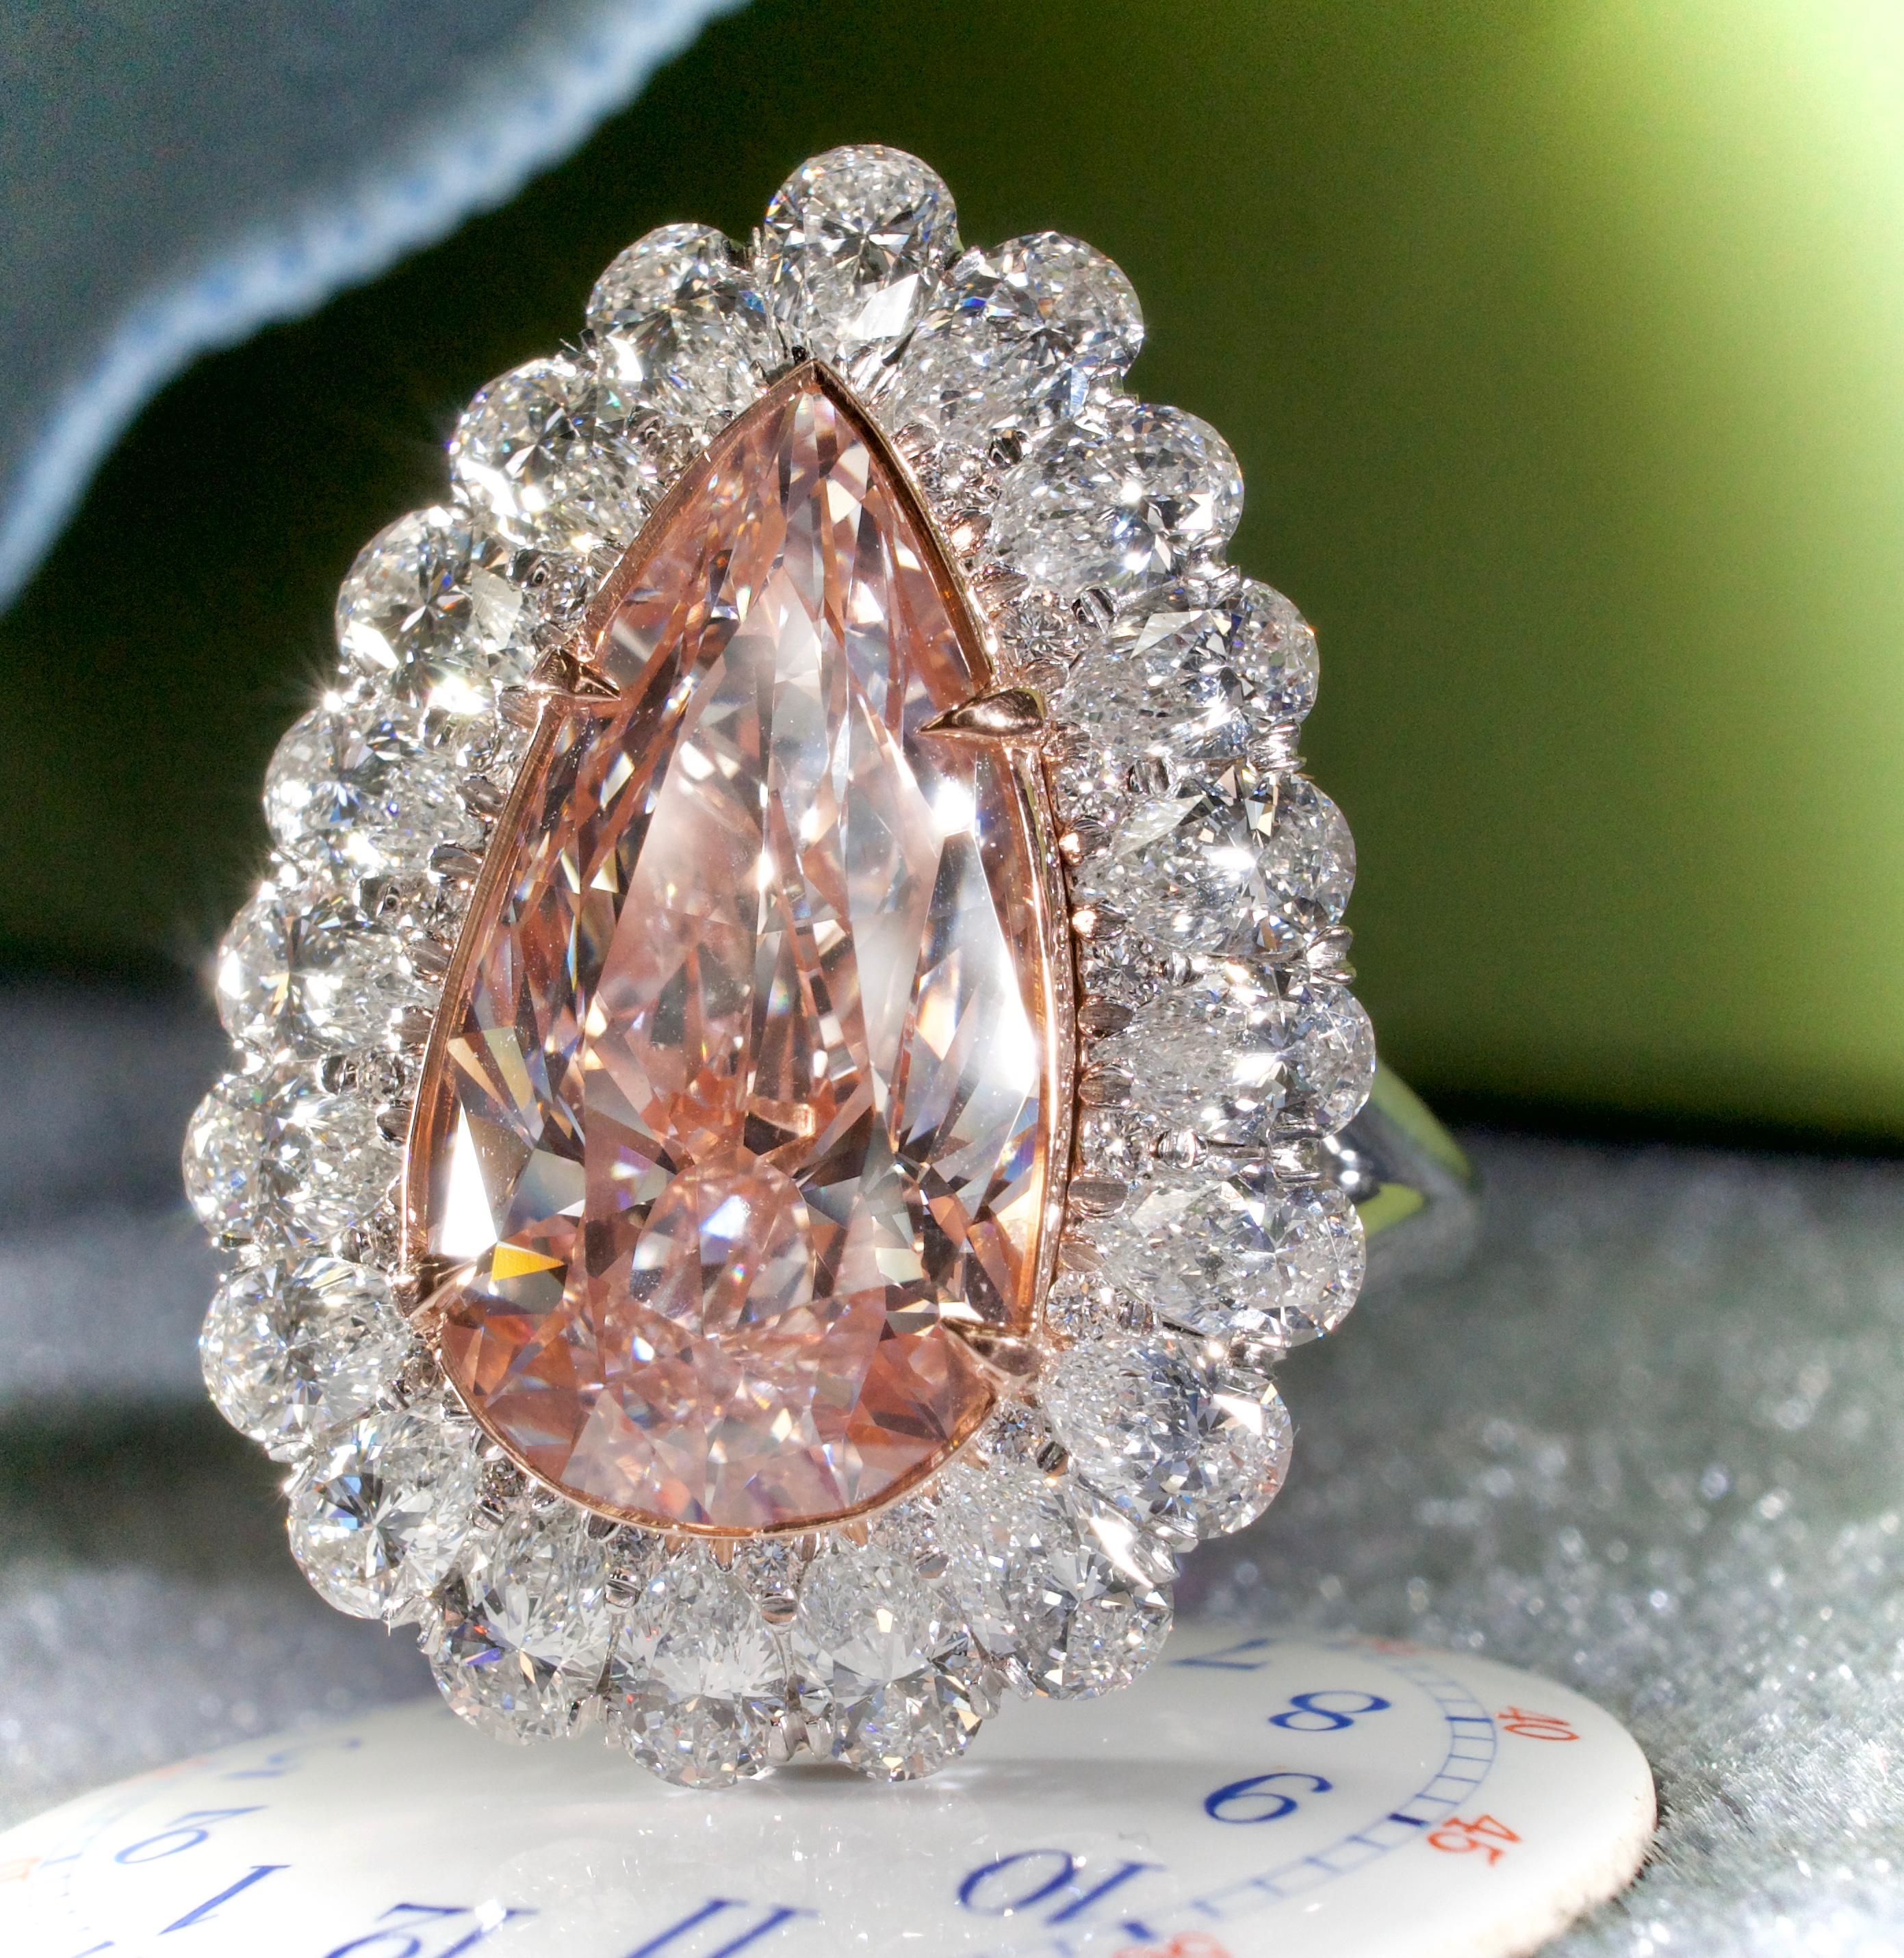 THE ROSE DIAMOND by Simon Ardem, Pink Diamond ring with GIA certificate, no.5182332500, including a GIA Type IIA (very rare) certificate. IGI Report No. 4706041761. Center stone: 5.59 ct Pear shape Light Pink VVS1 natural diamond, 16.85 x 9.29 x